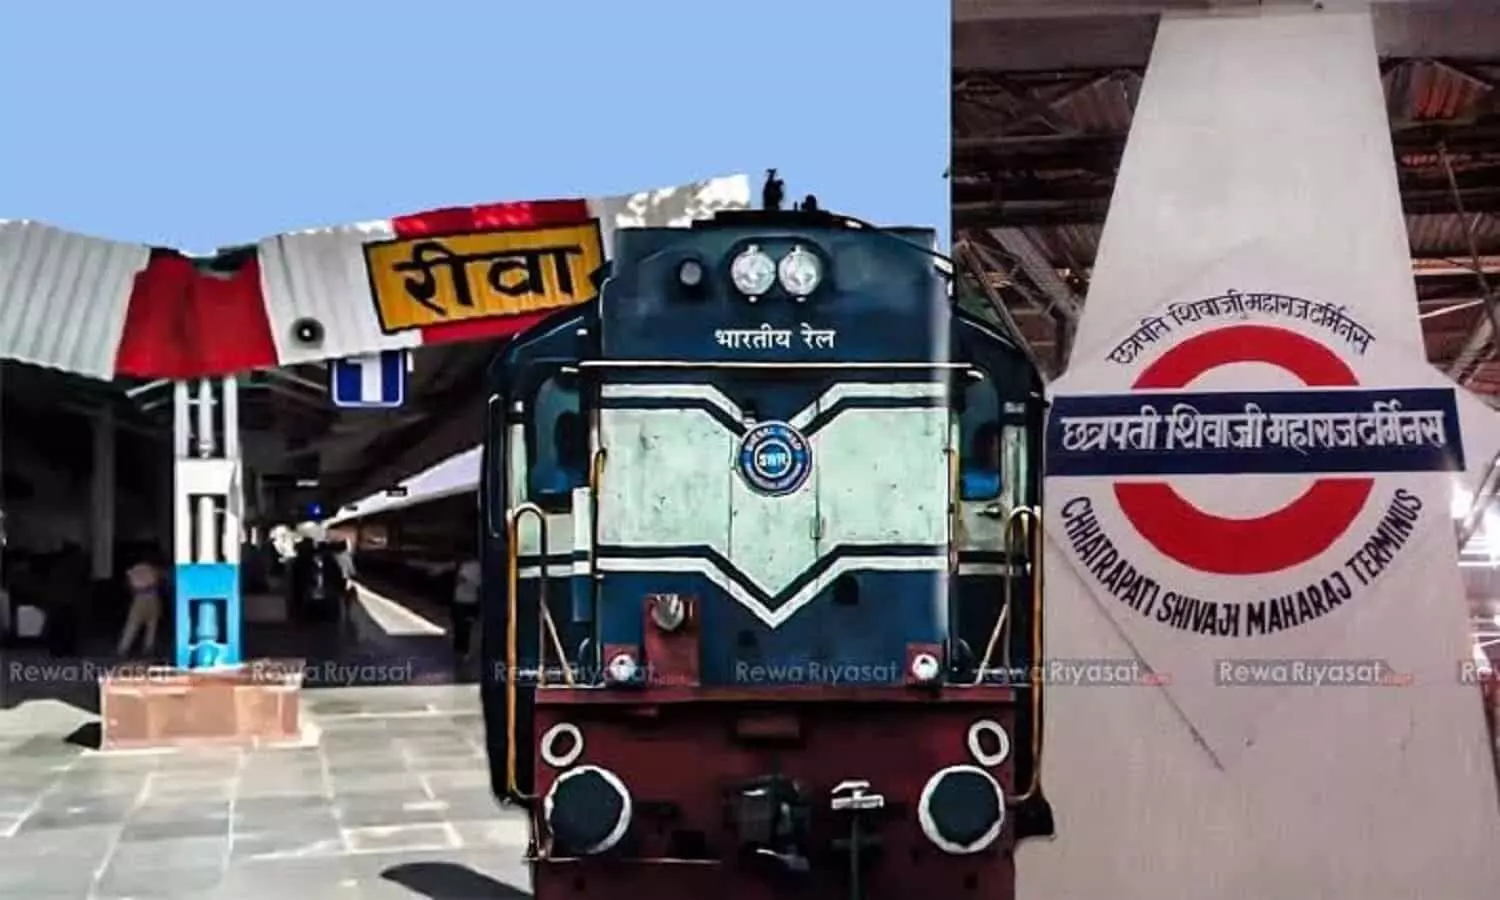 Rewa Mumbai Express Train News